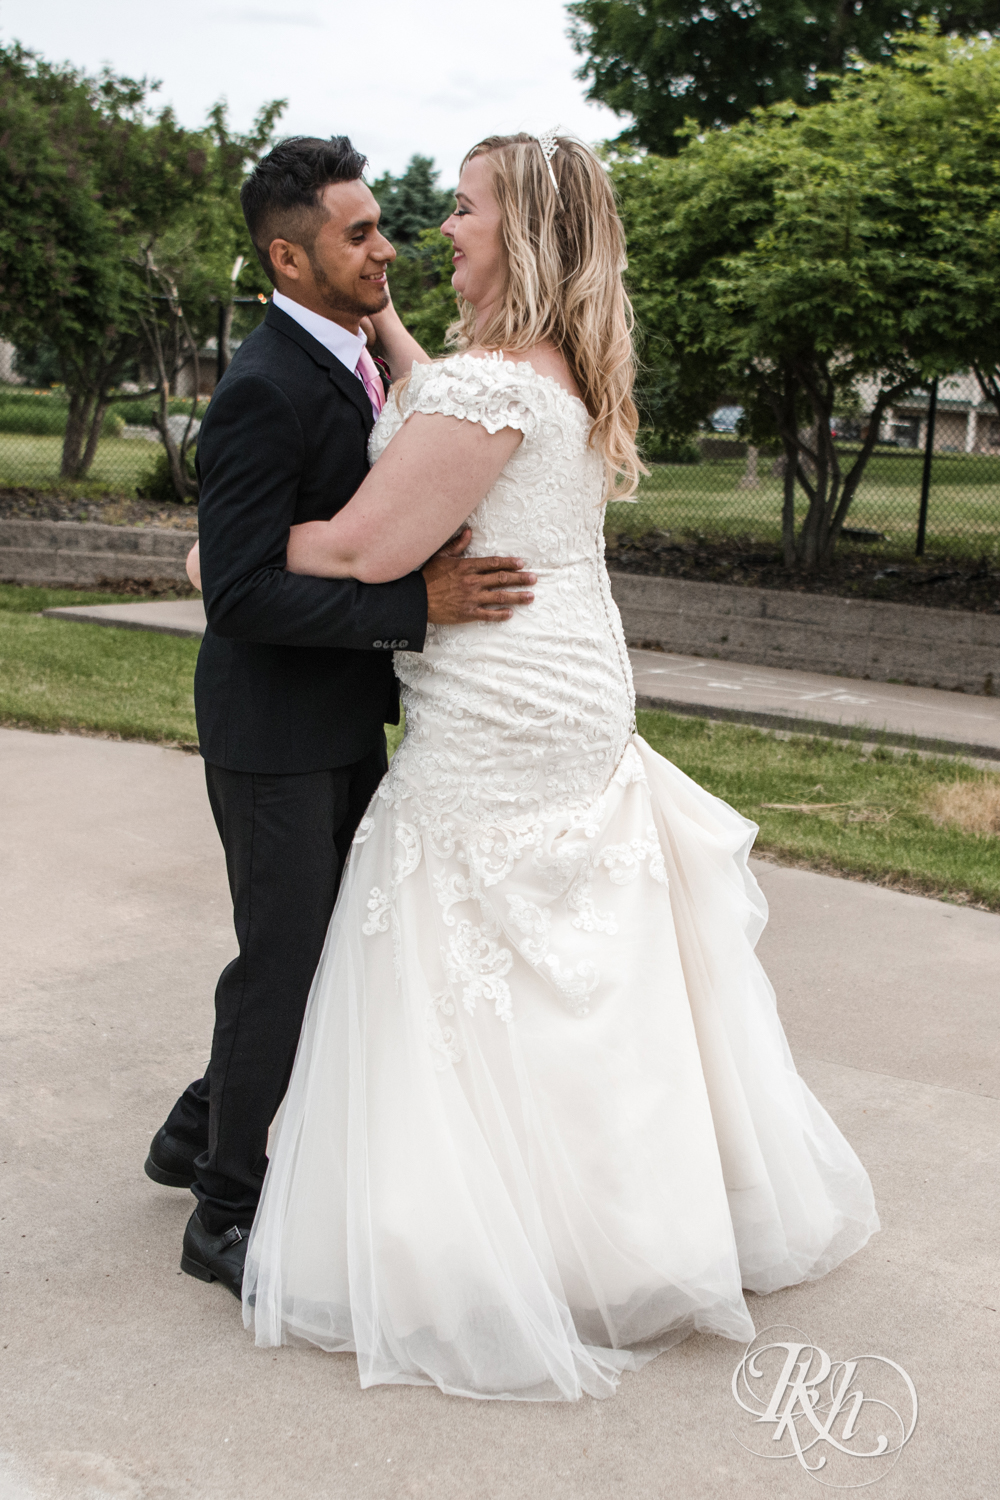 Bride and groom dance during wedding reception at Izatys Resort in Onamia, Minnesota.